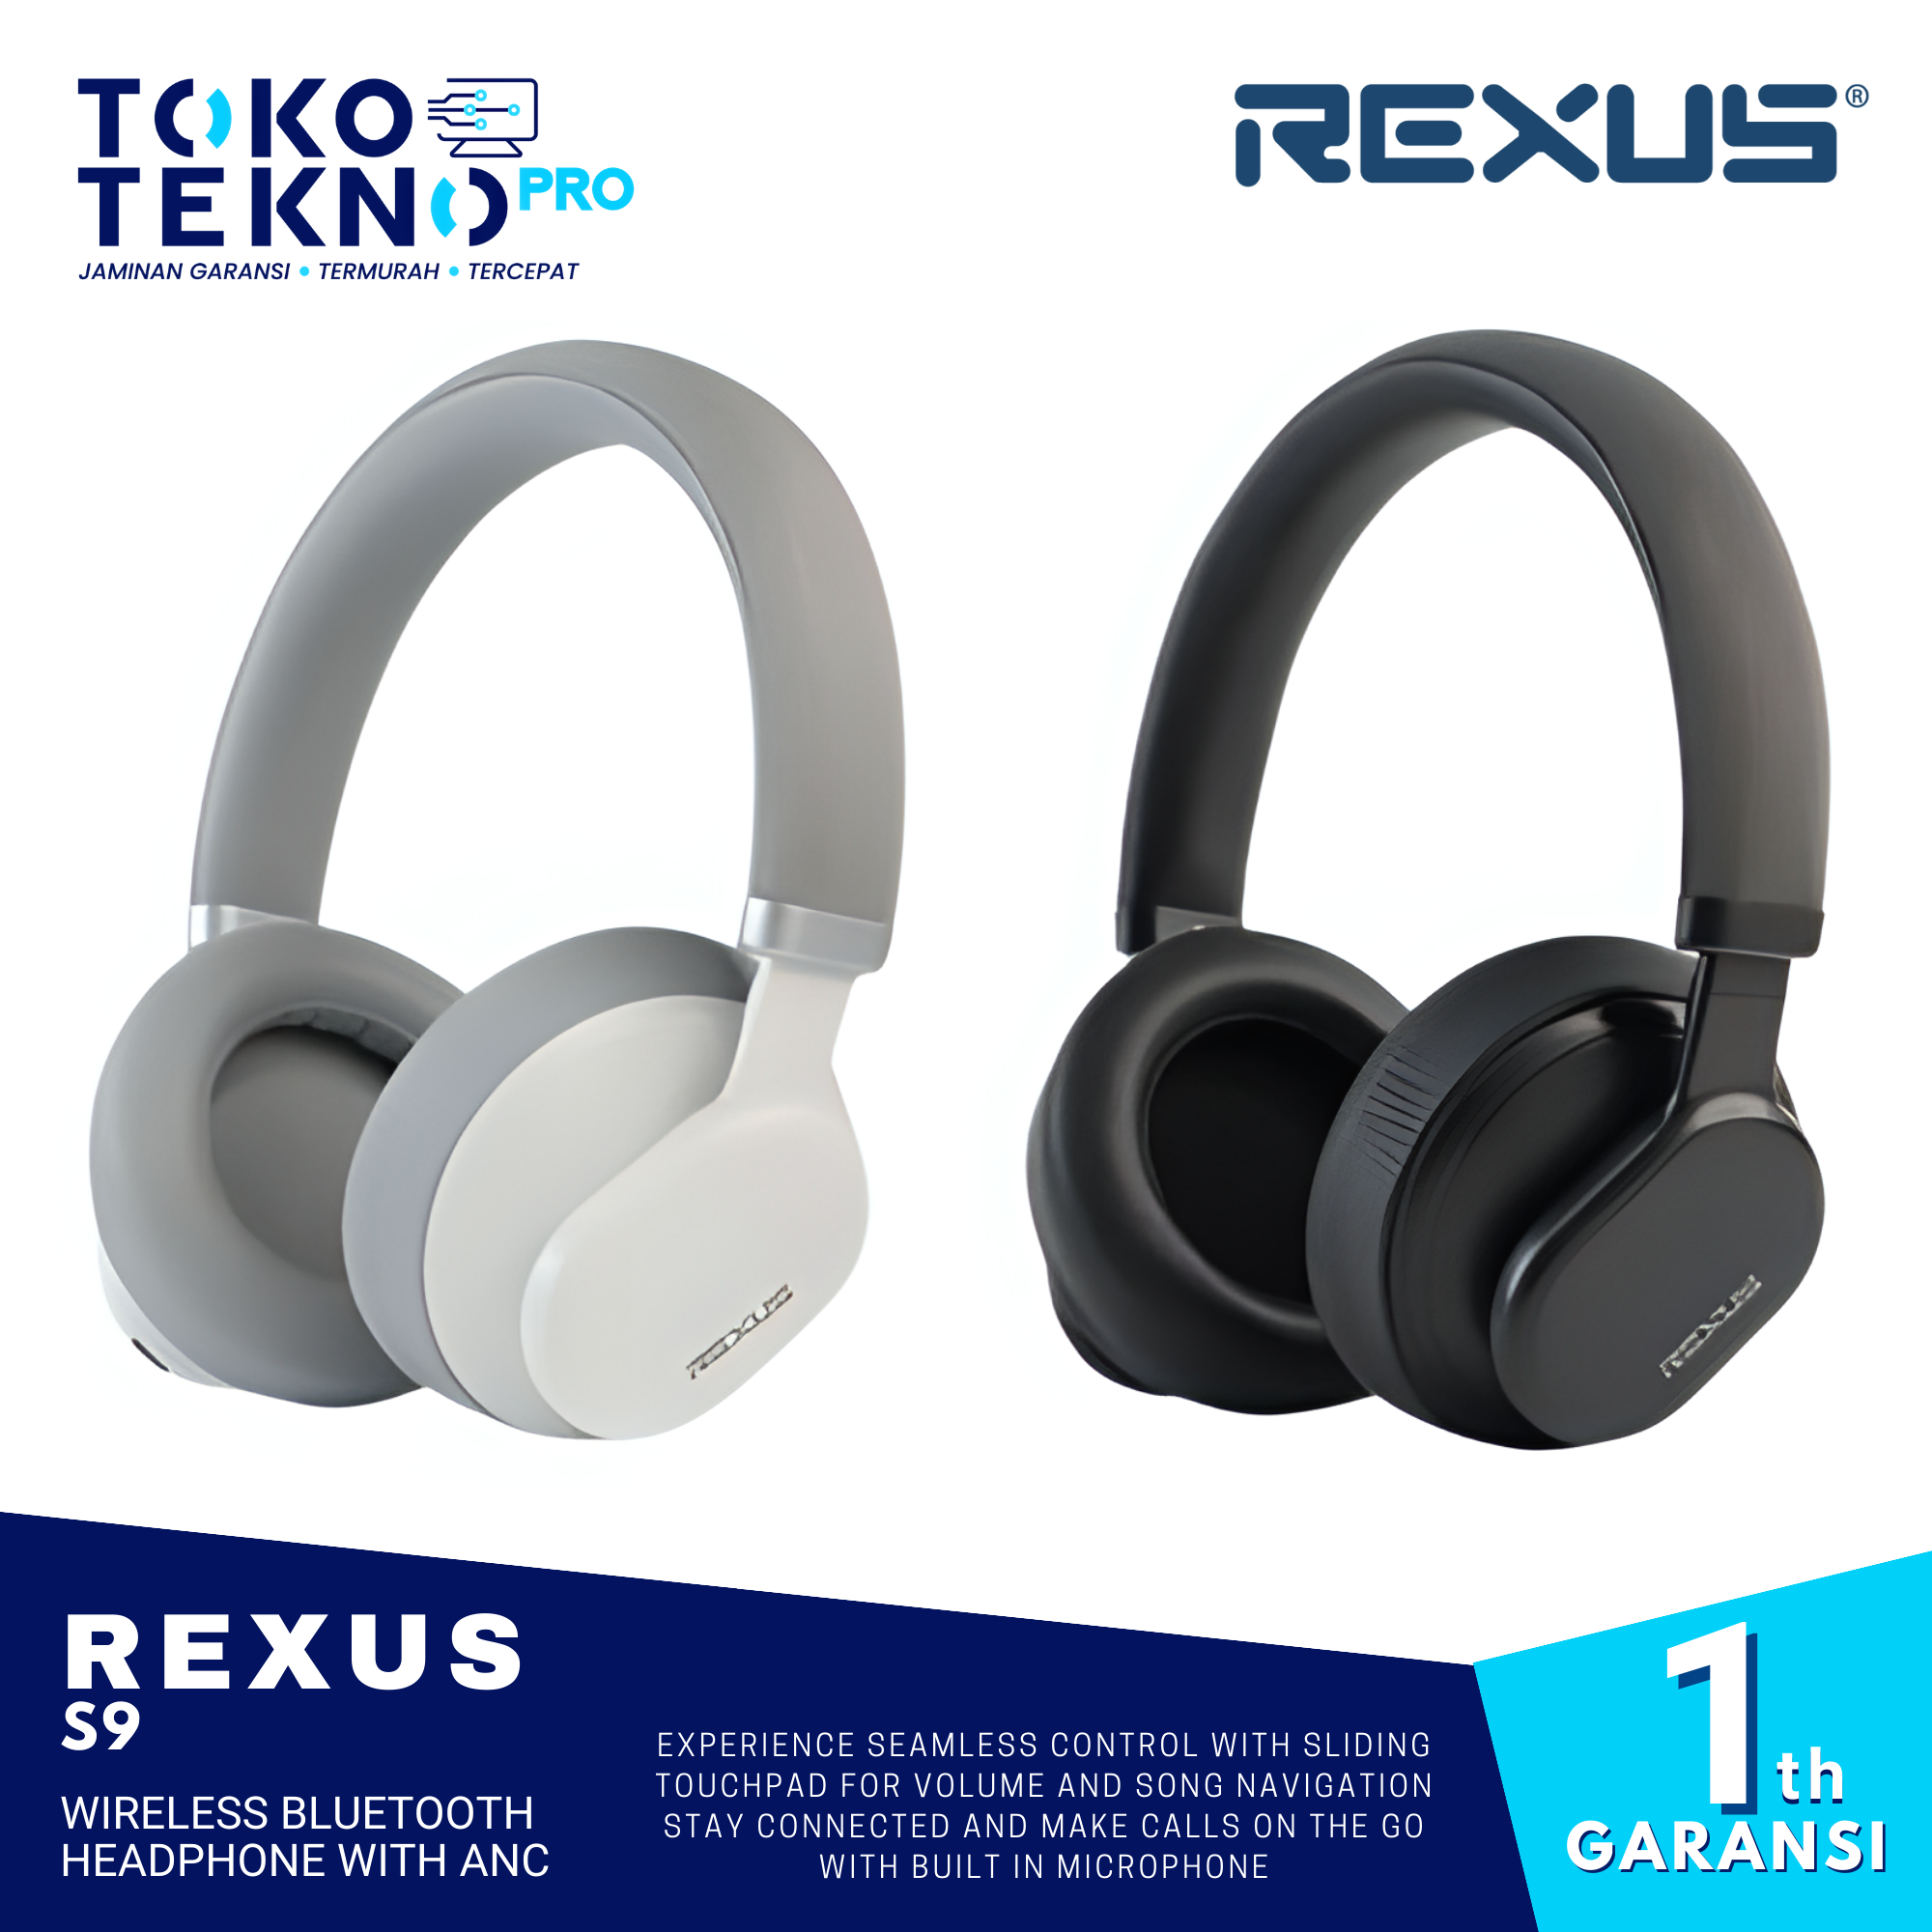 Rexus S9 Wireless Bluetooth Headphone With ANC